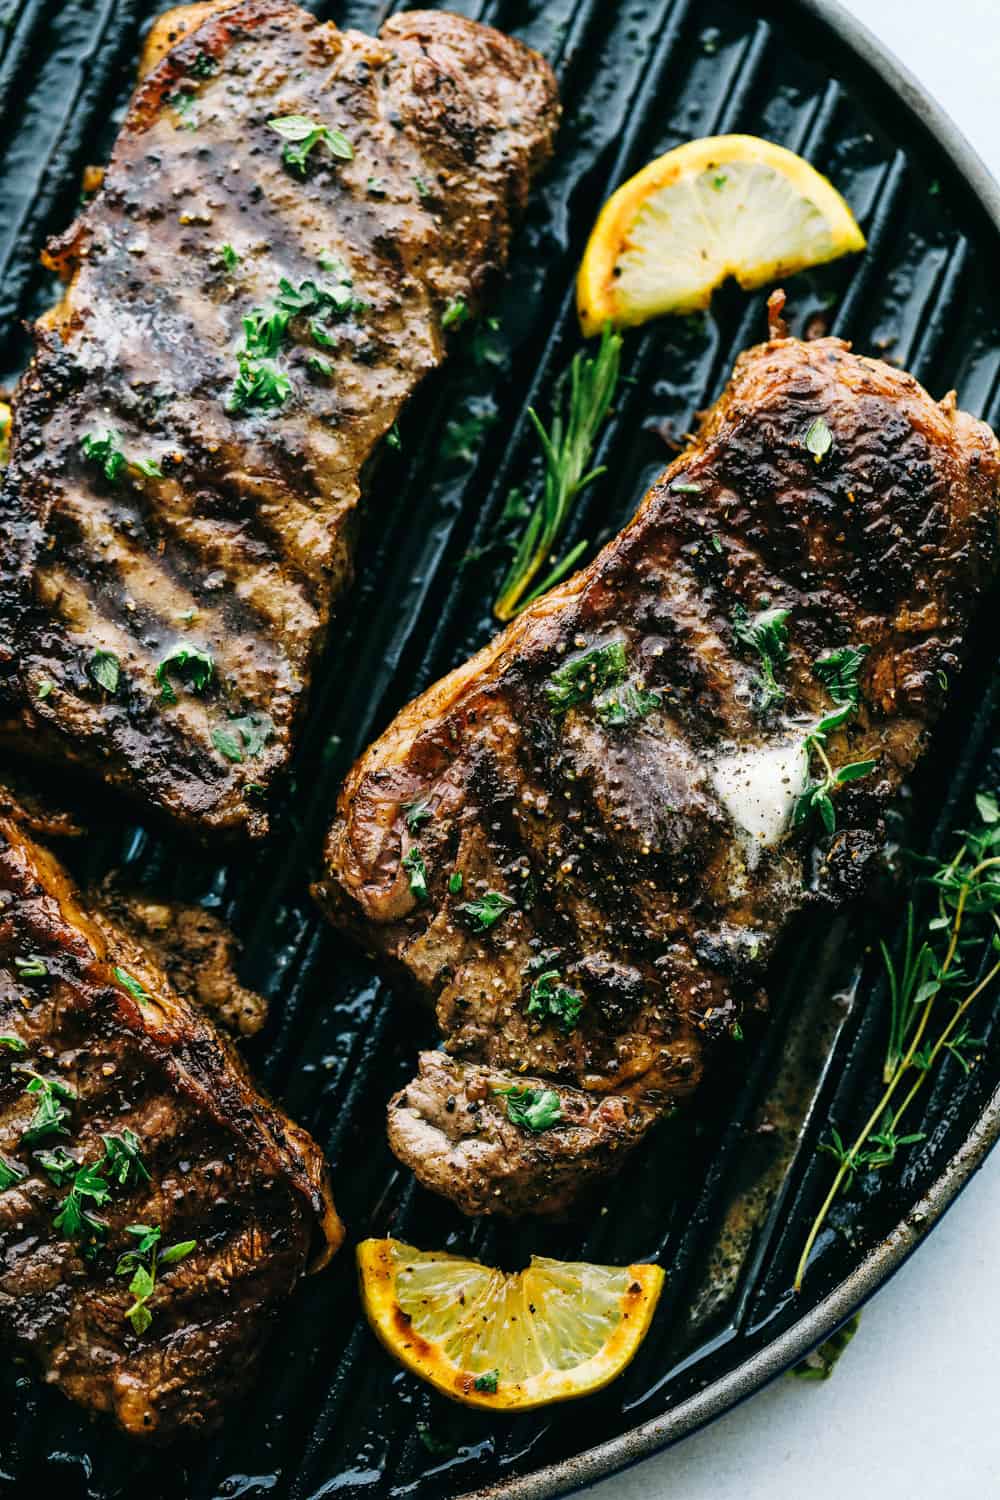 Perfectly Juicy Grilled Steak